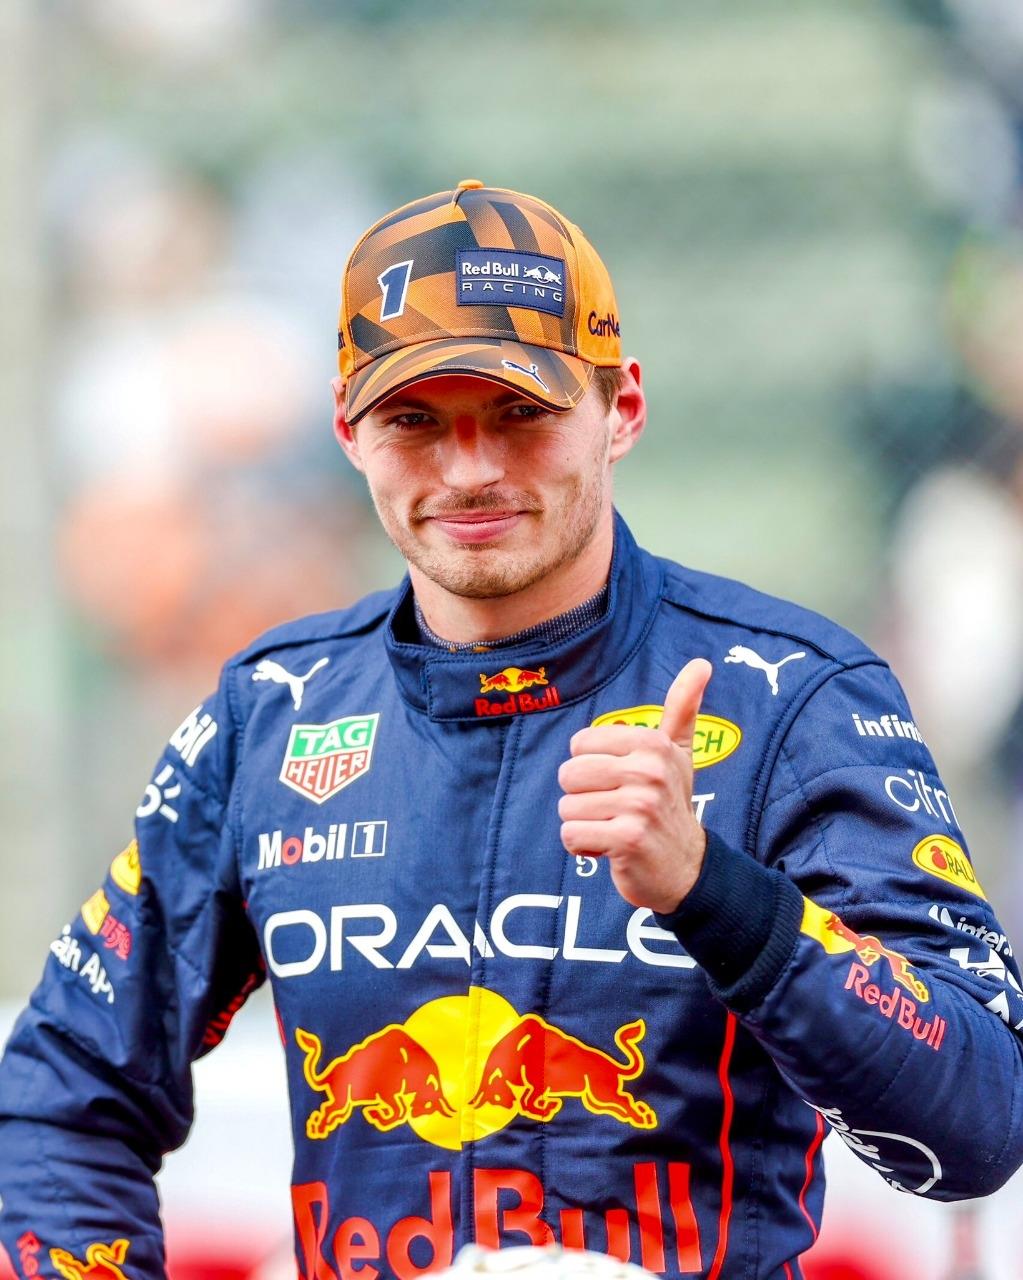  Formula 1: Verstappen Beats Alonso To Win Monaco GP Despite Late Drama Caused By Rain 